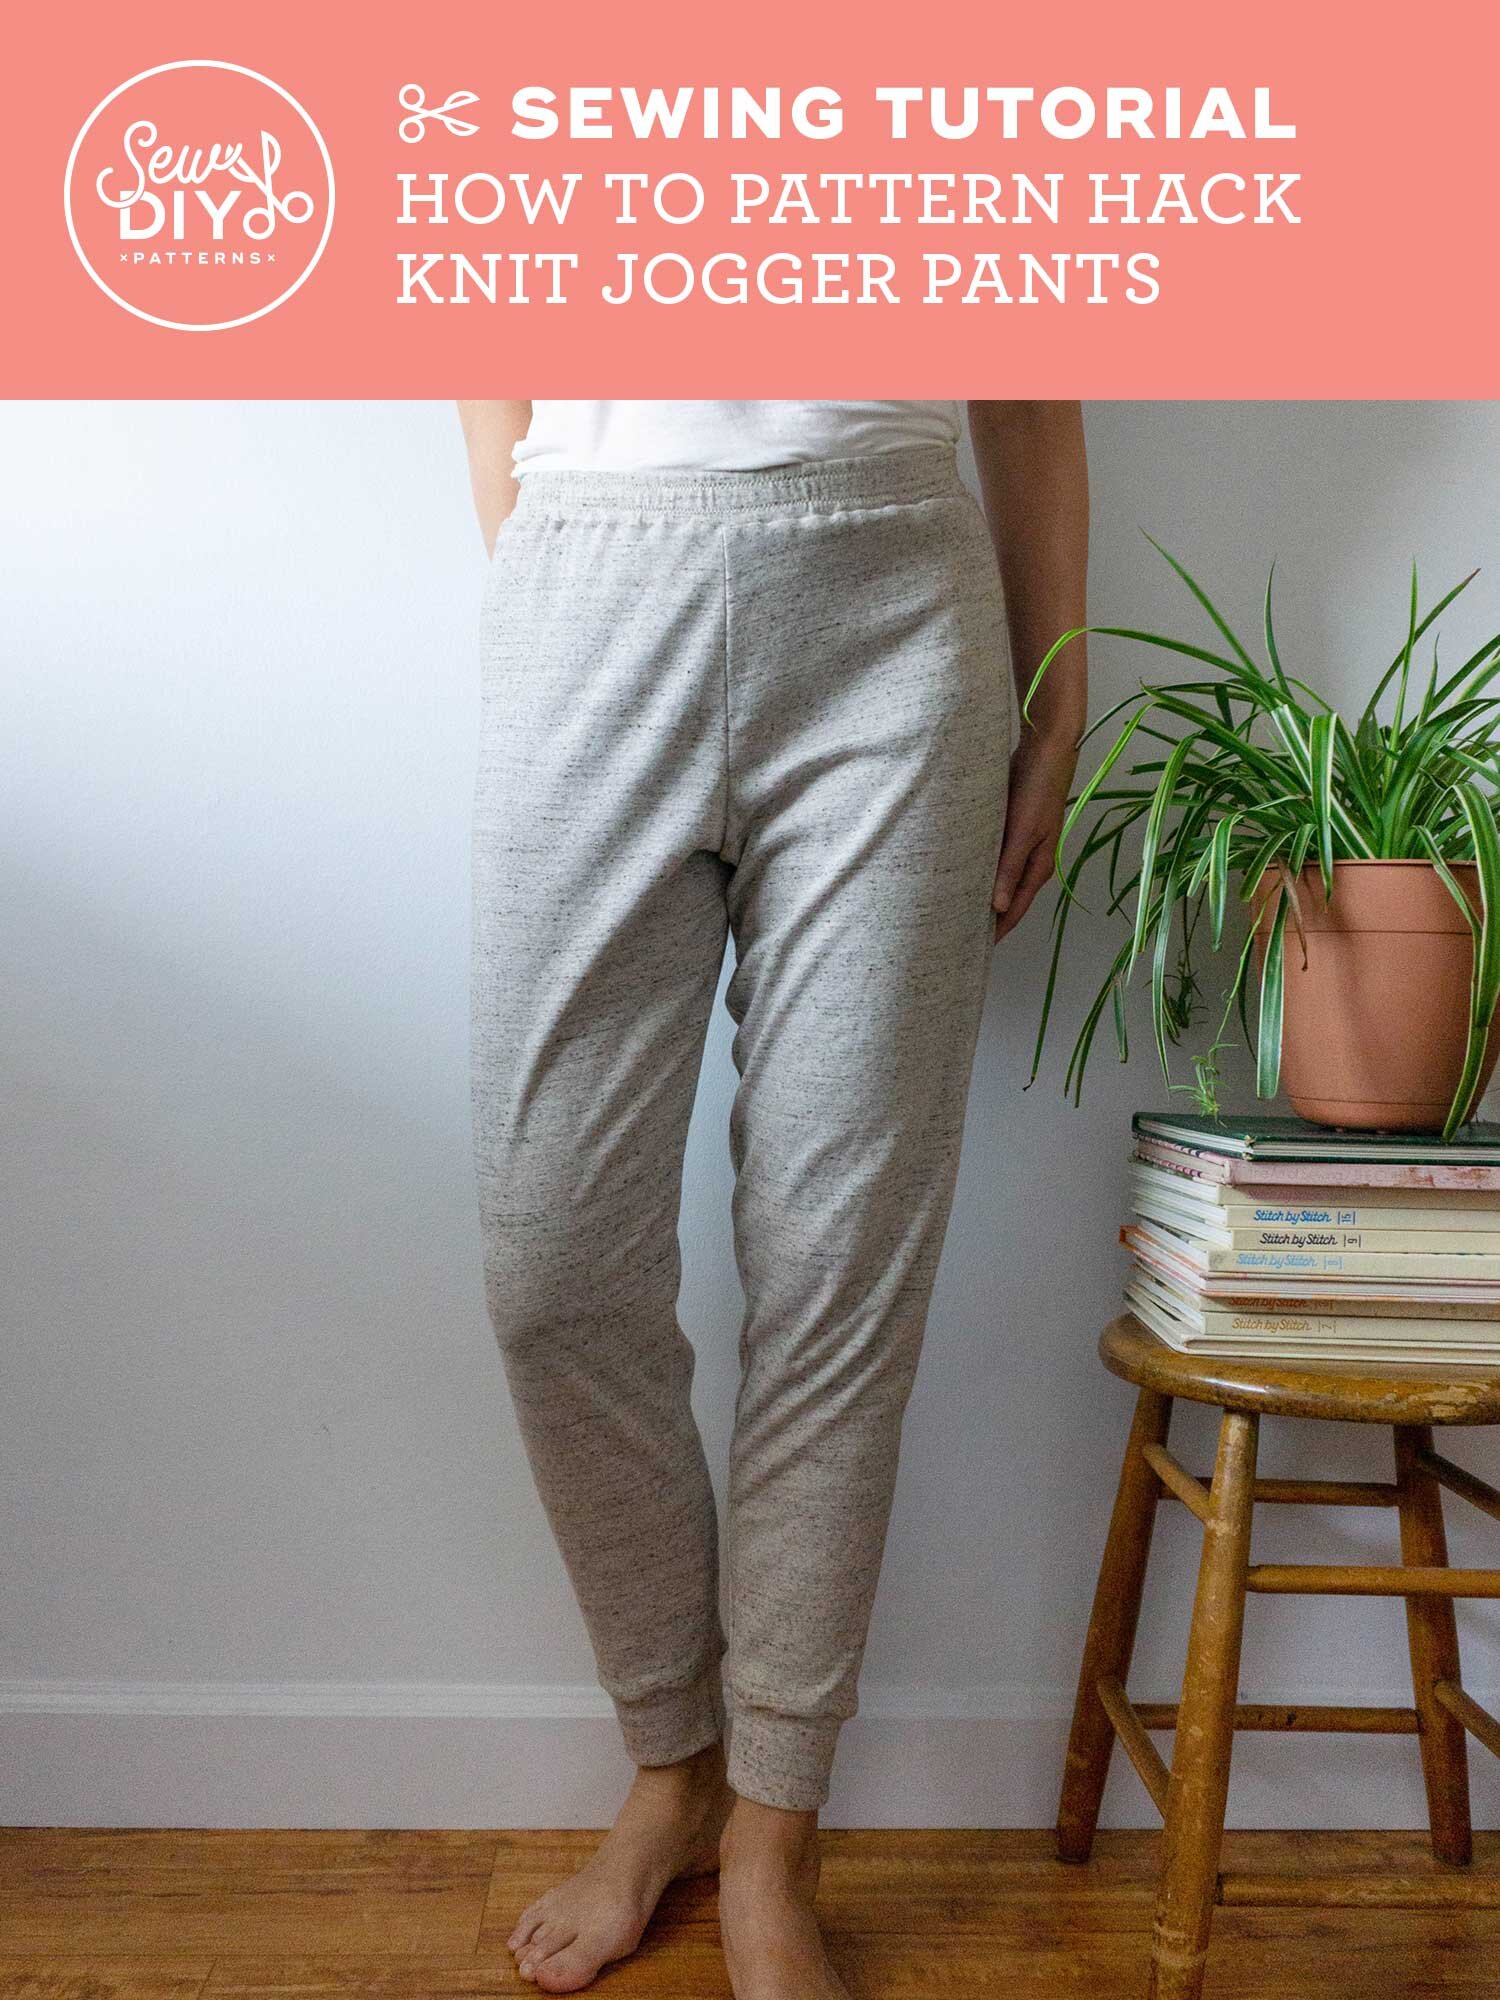 Knit Jogger Pants - Sweatsuit pattern hack — Sew DIY